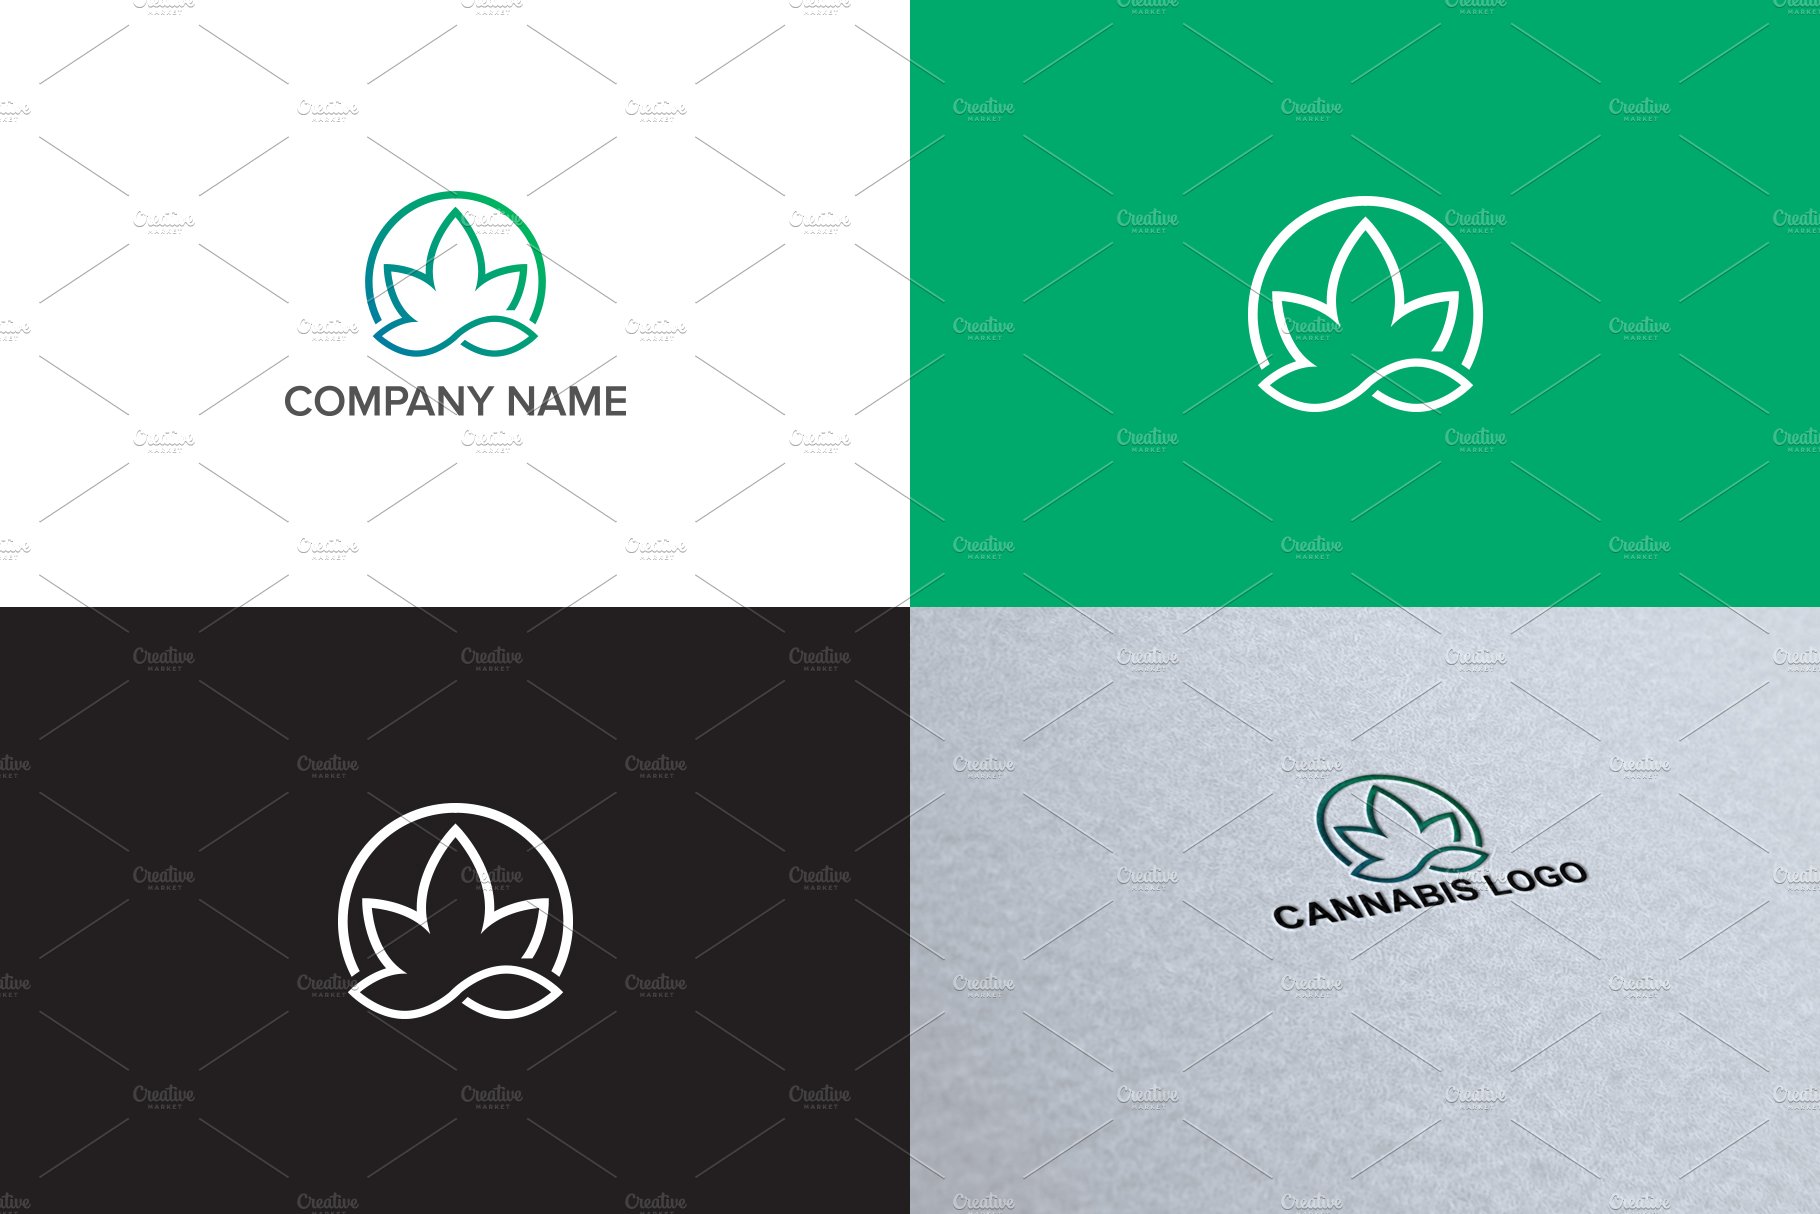 Cannabis logo design preview image.